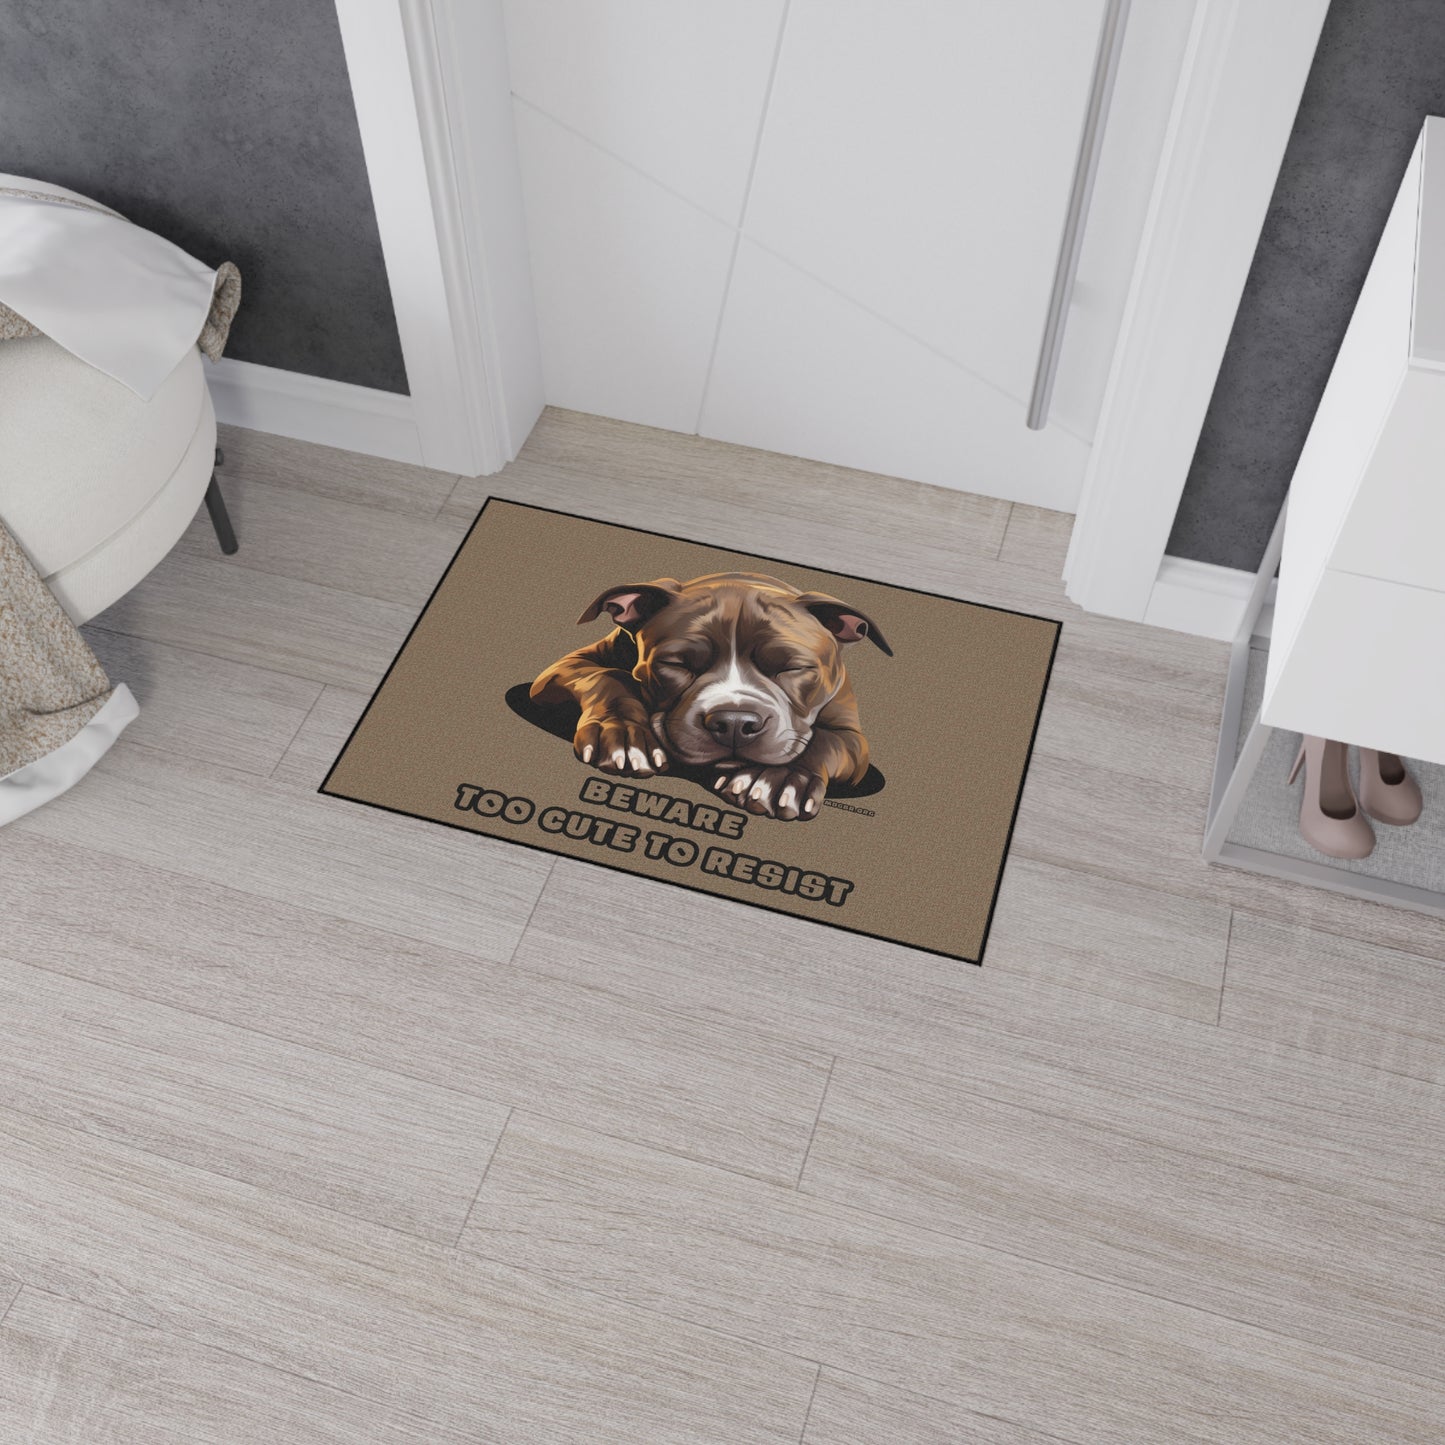 MSGBR Bully Rescue Pitbull Dog Breed Beware ... Too Cute To Resist Doormat Door Mat Rug